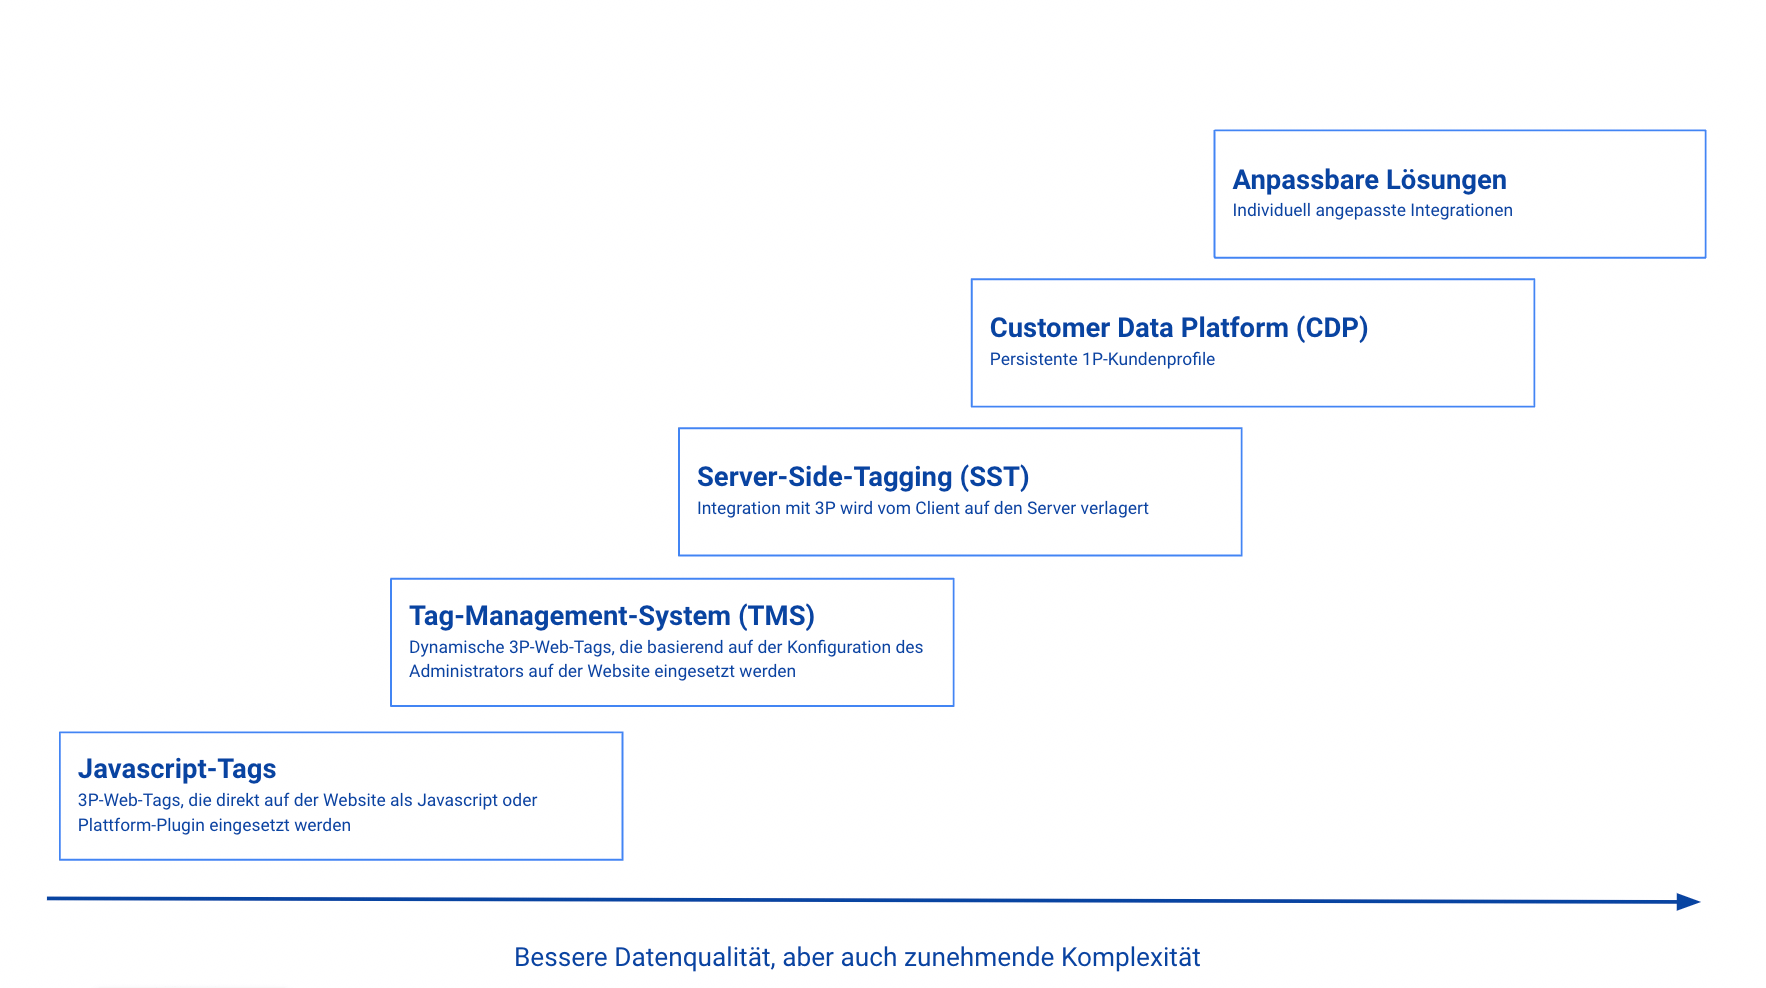 Customer Data Platform (CDP), Server-Side-Tagging (SST), Tag-Management-System (TMS) UND Javascript-Tags in blauen Kästchen - Usercentrics